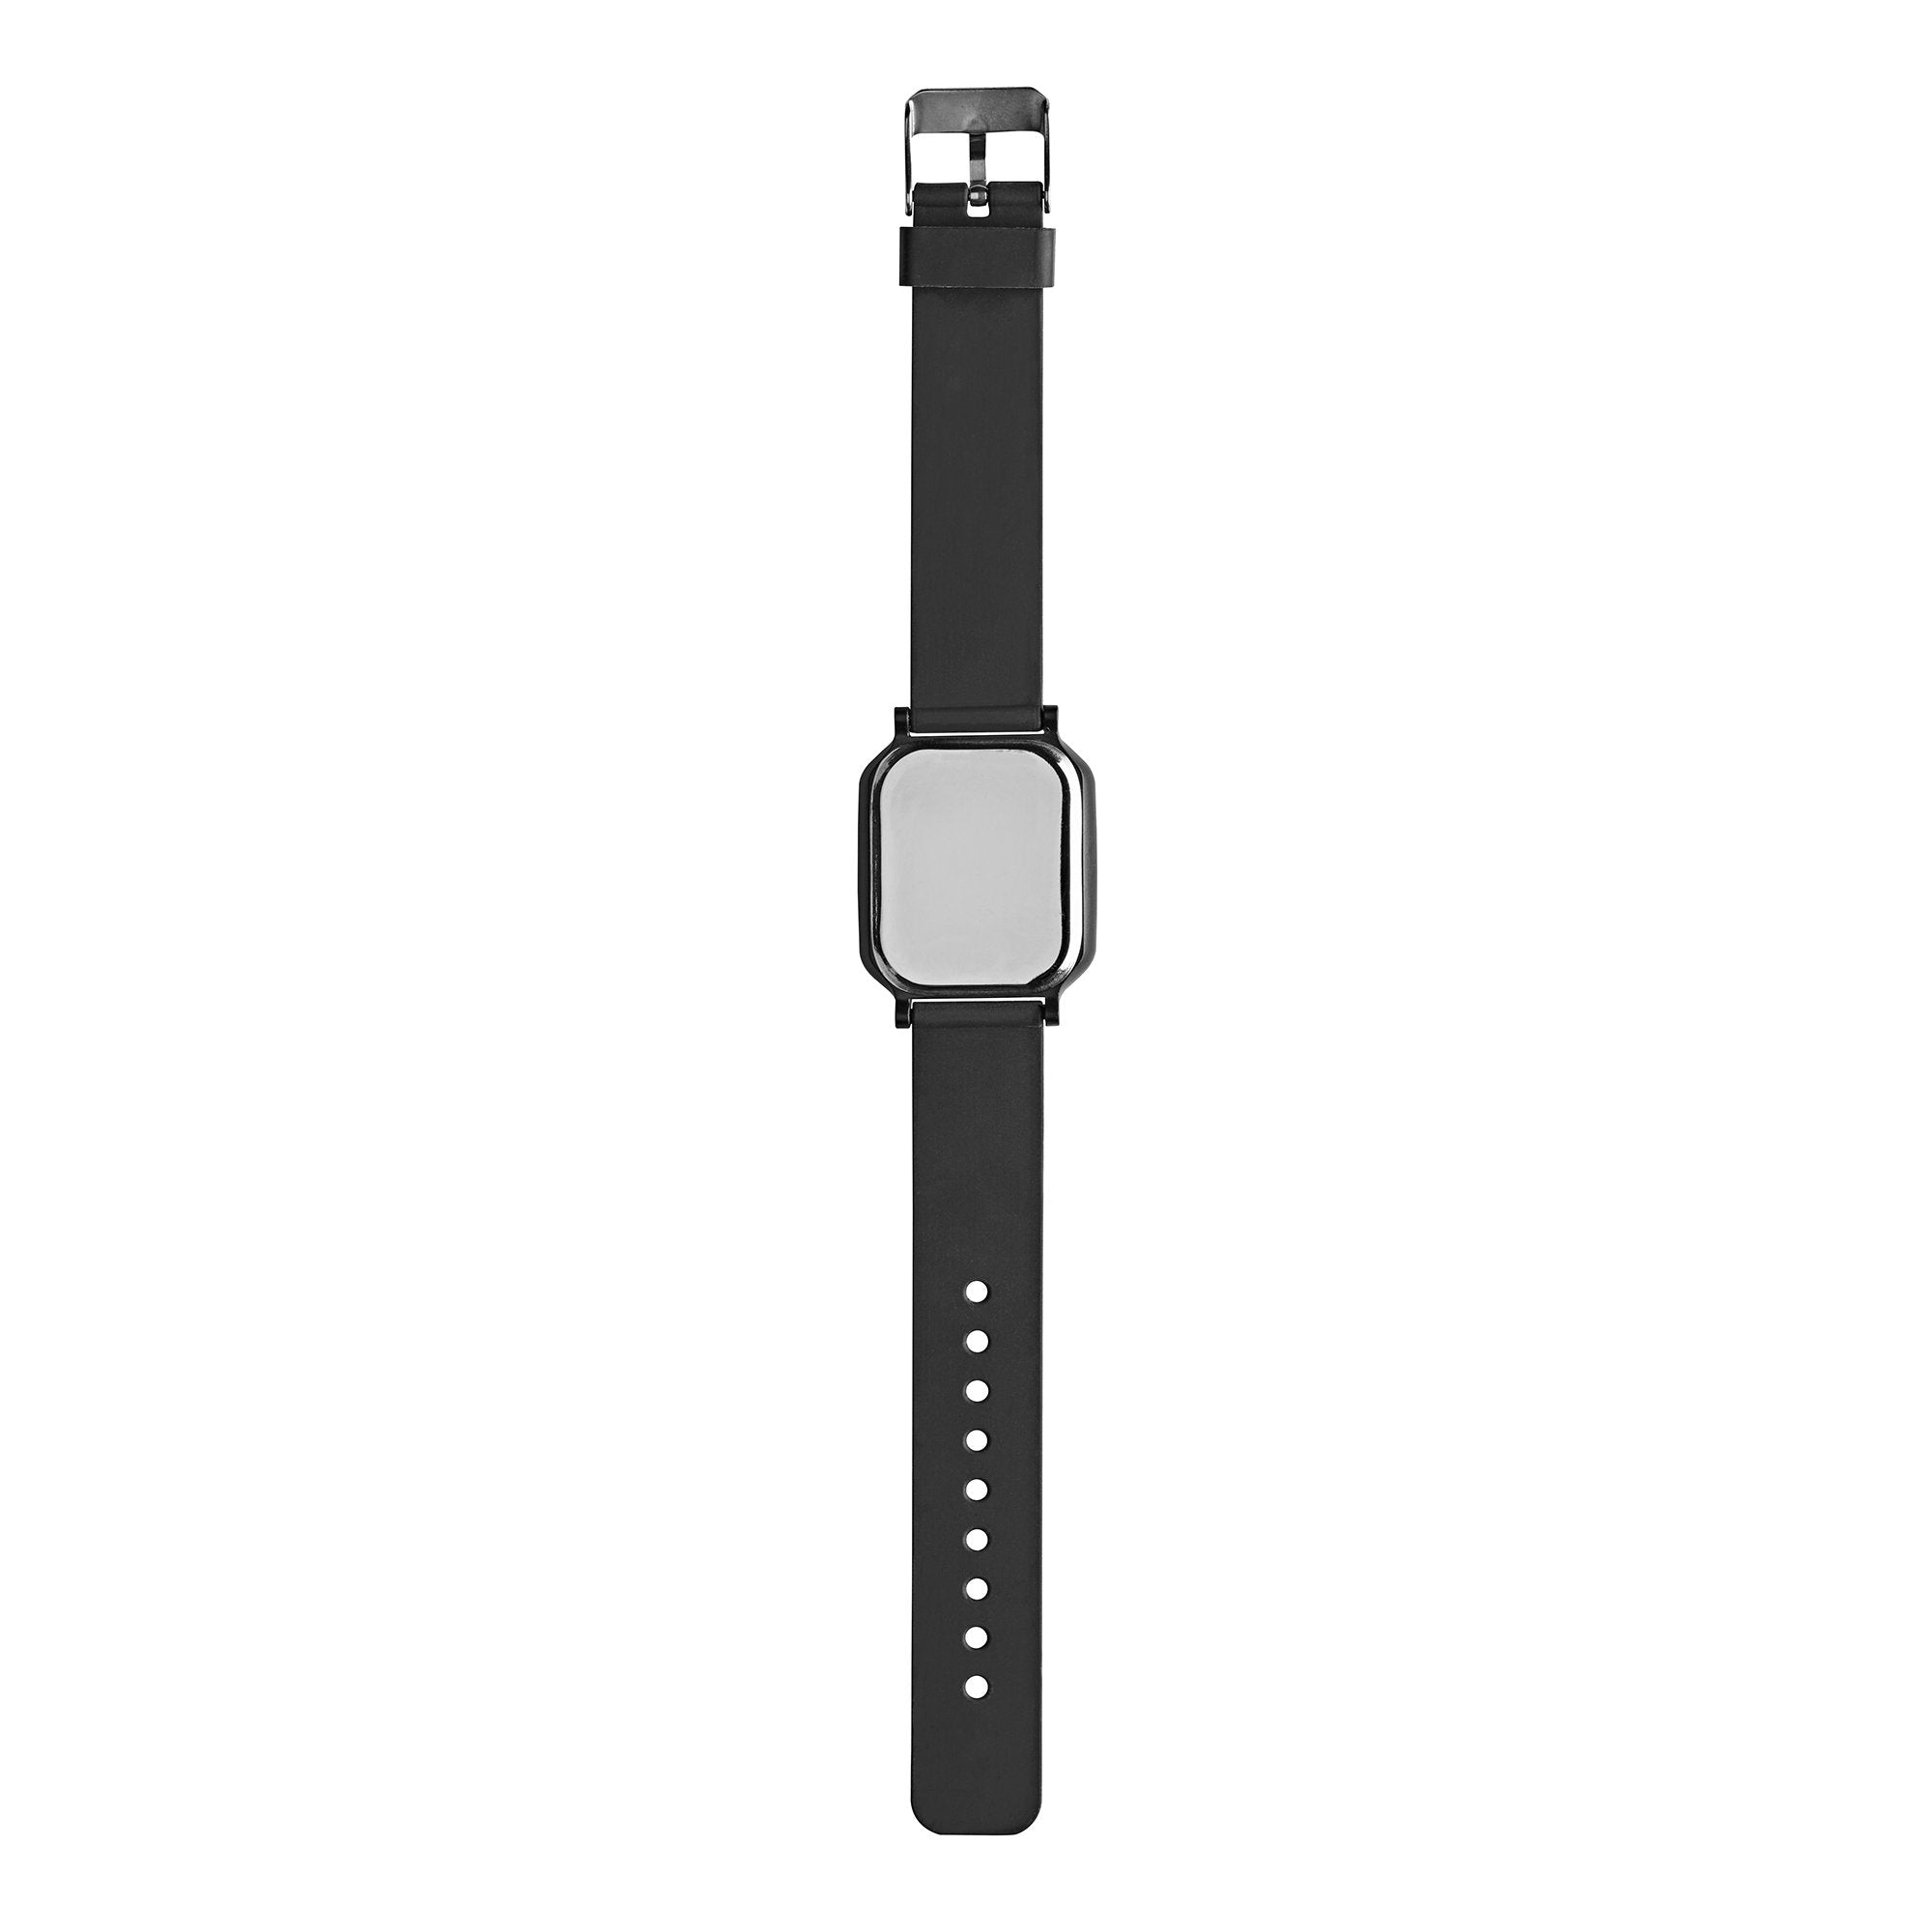 Tinc Digital Display Watch - Black